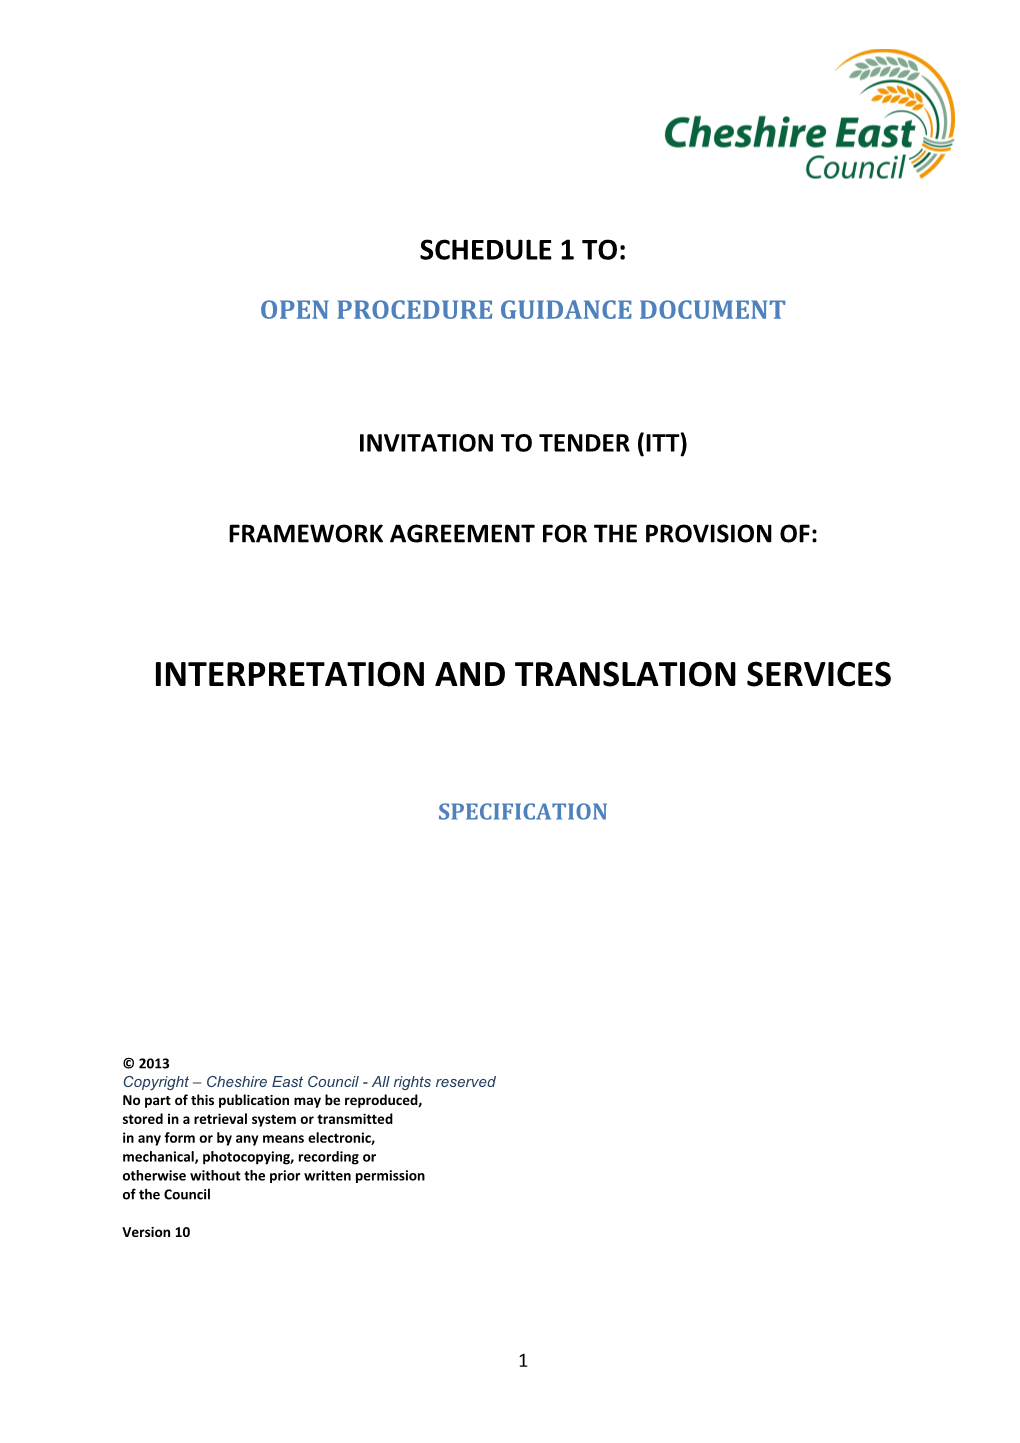 Open Procedure Guidance Document